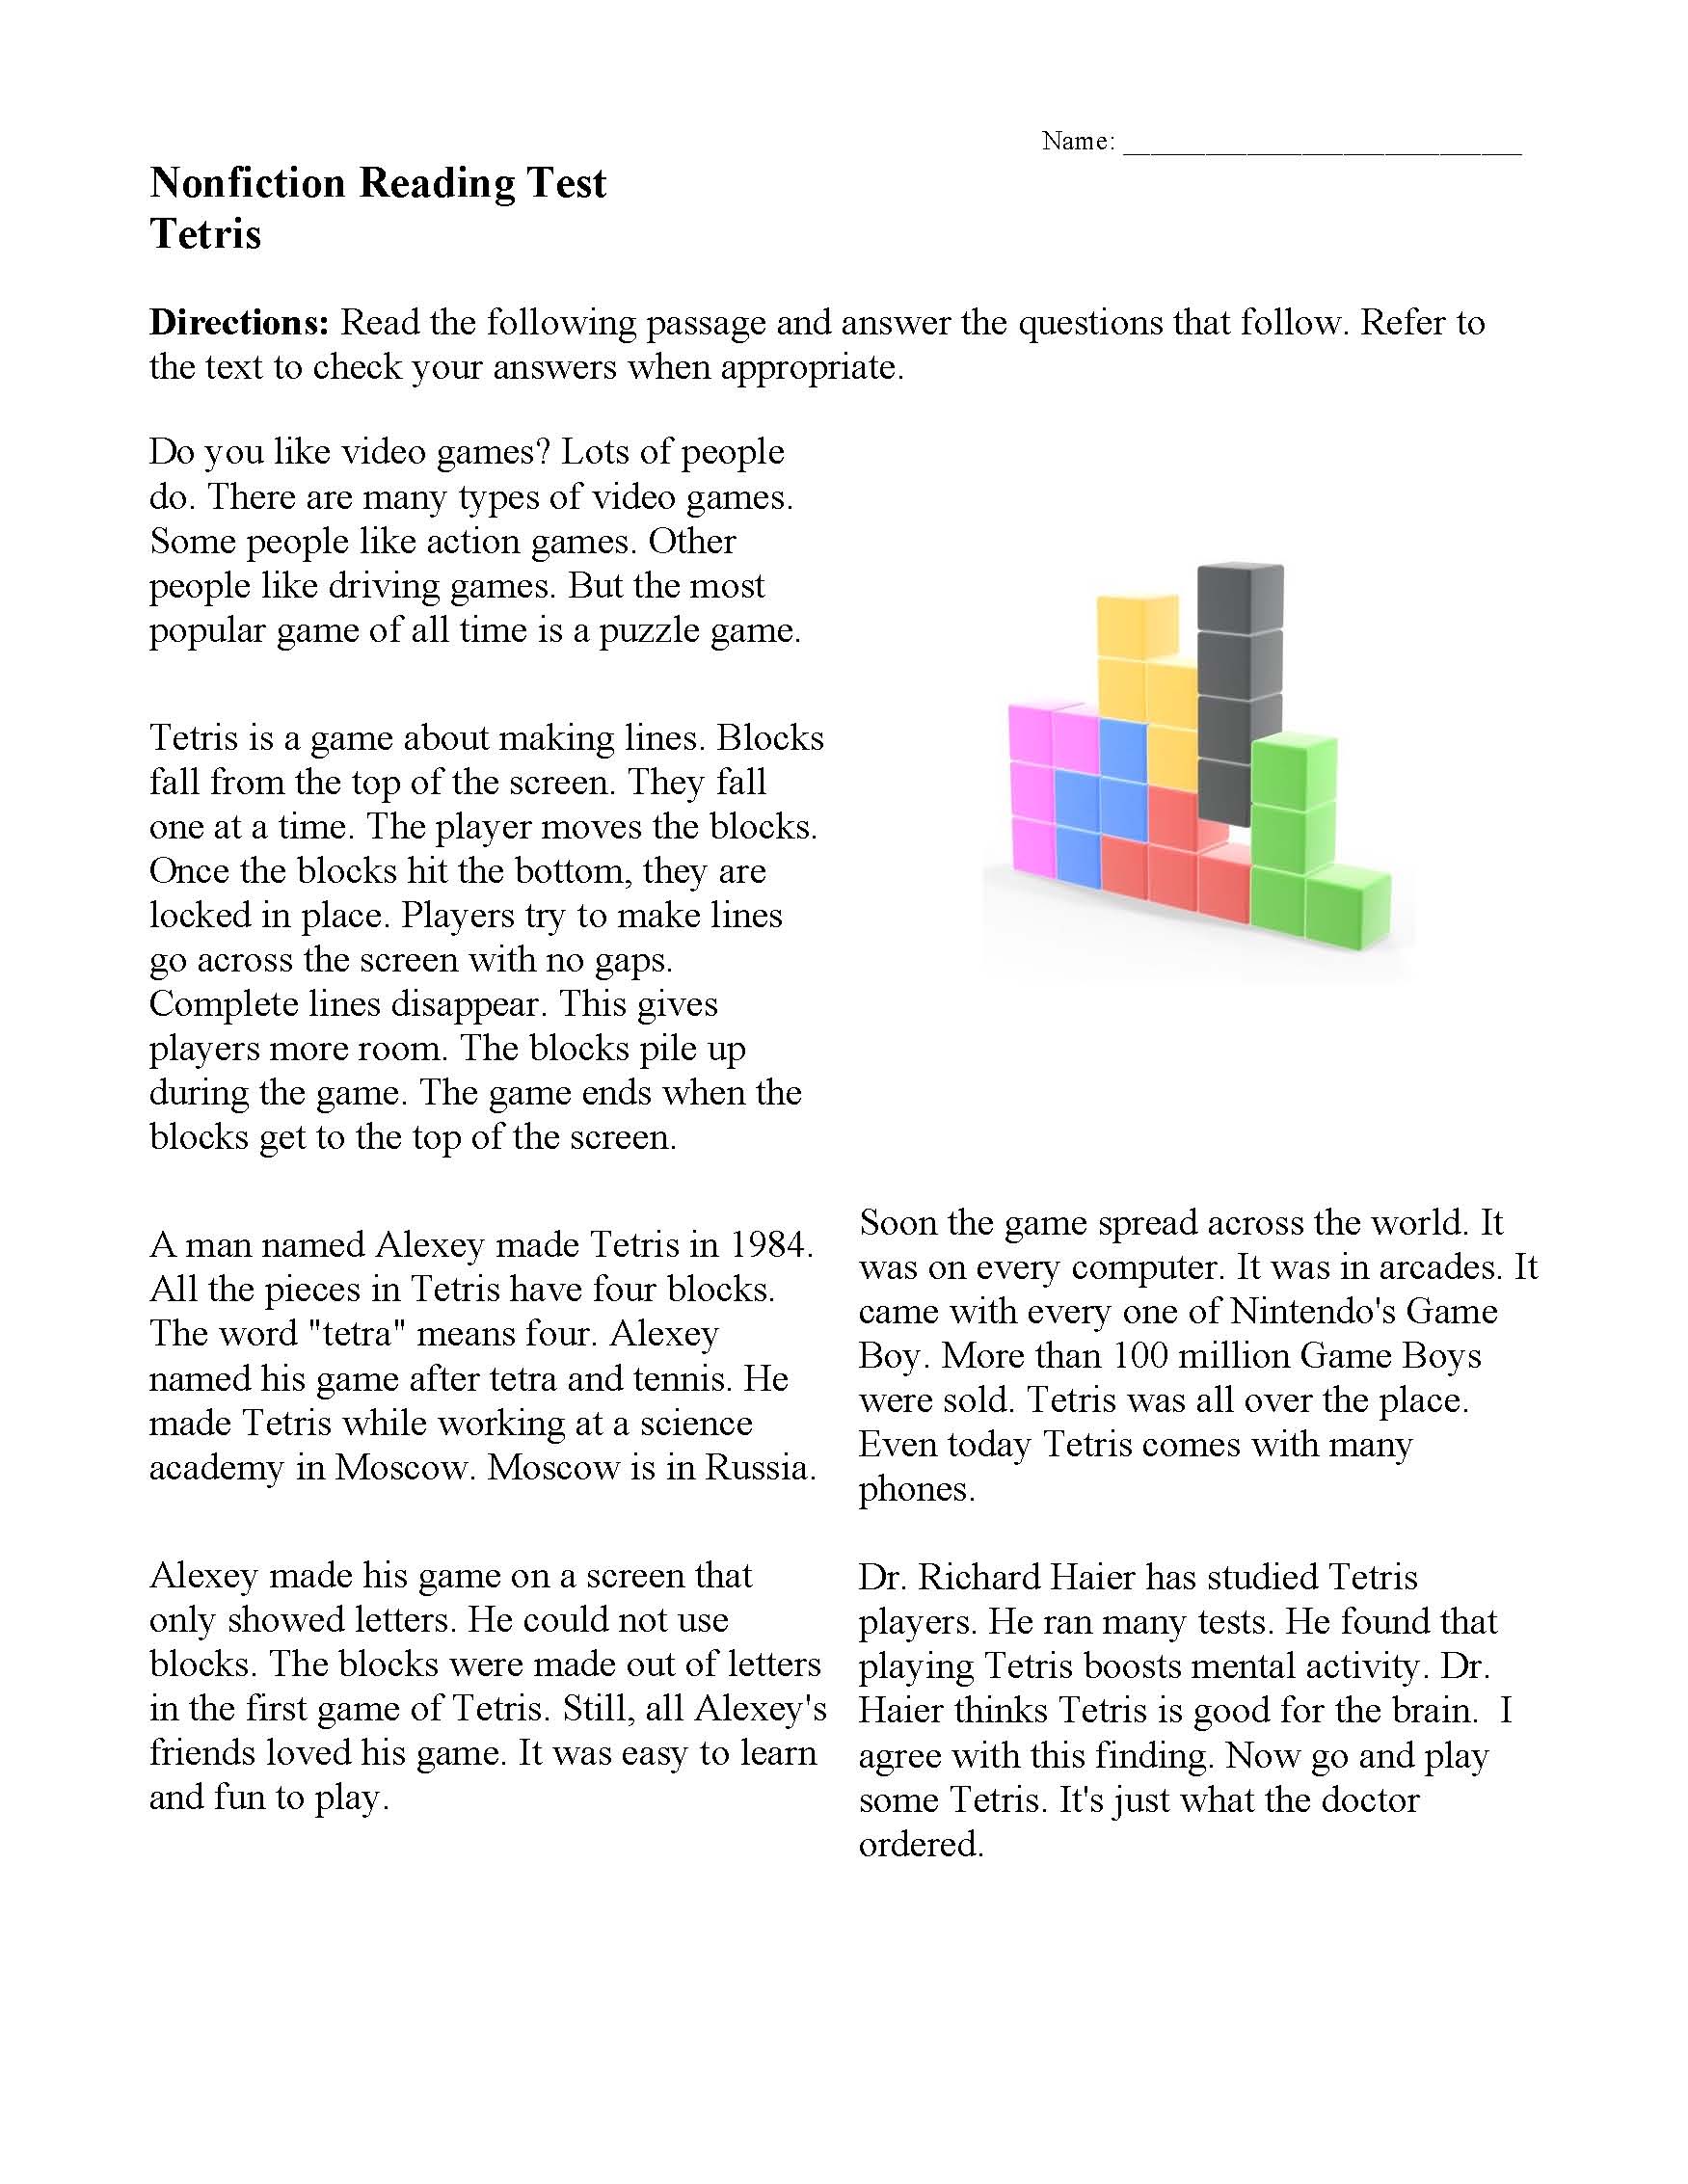 Tetris | Nonfiction Reading Activity